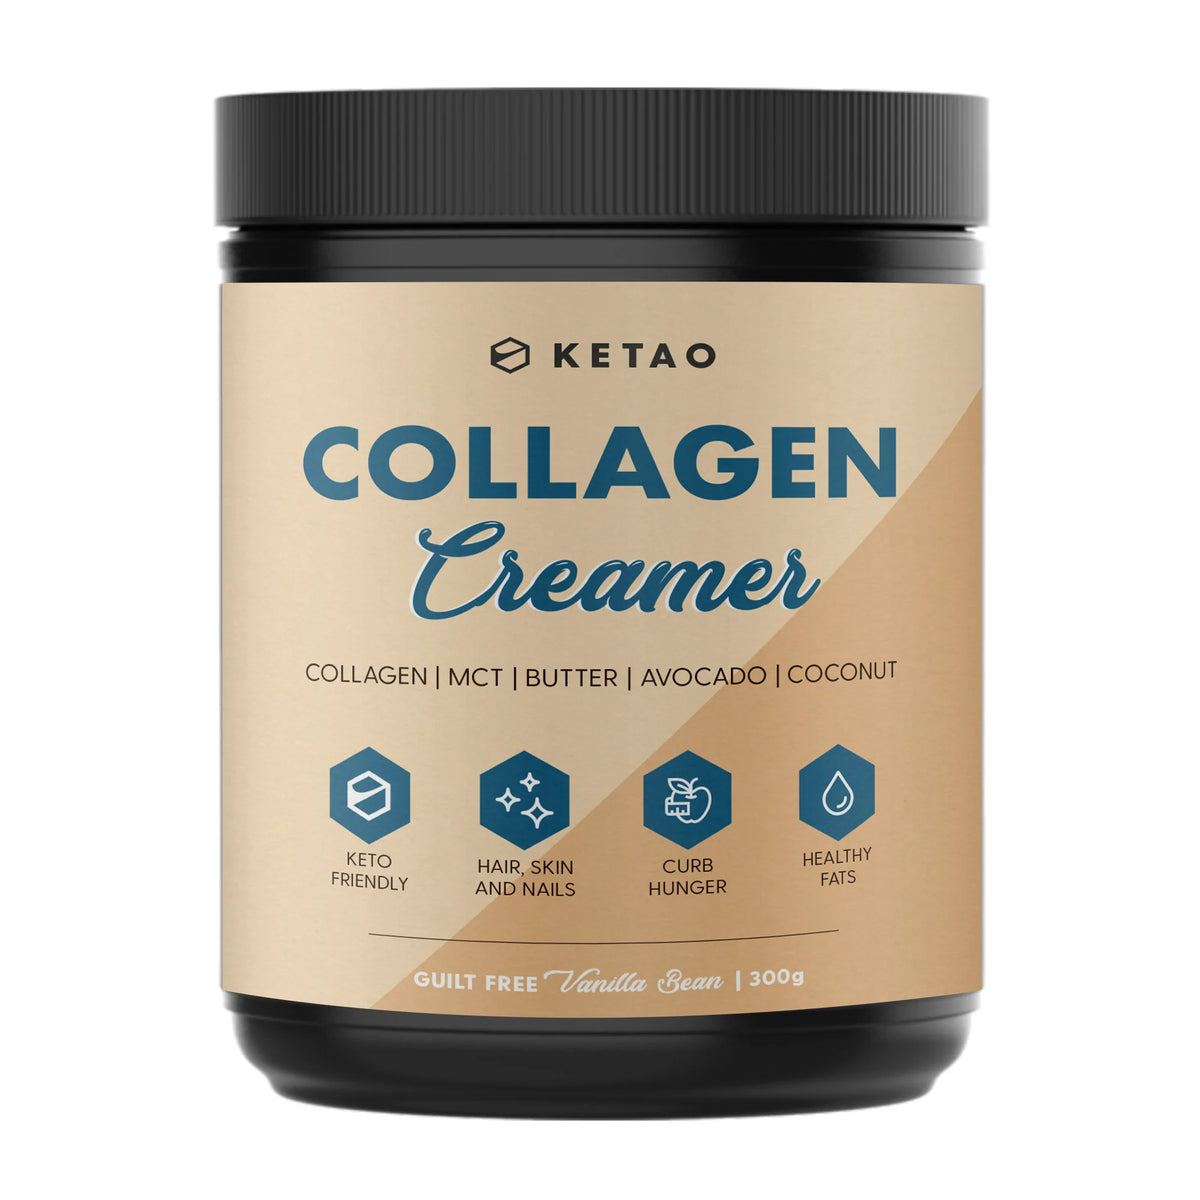 Ketao Collagen Creamer